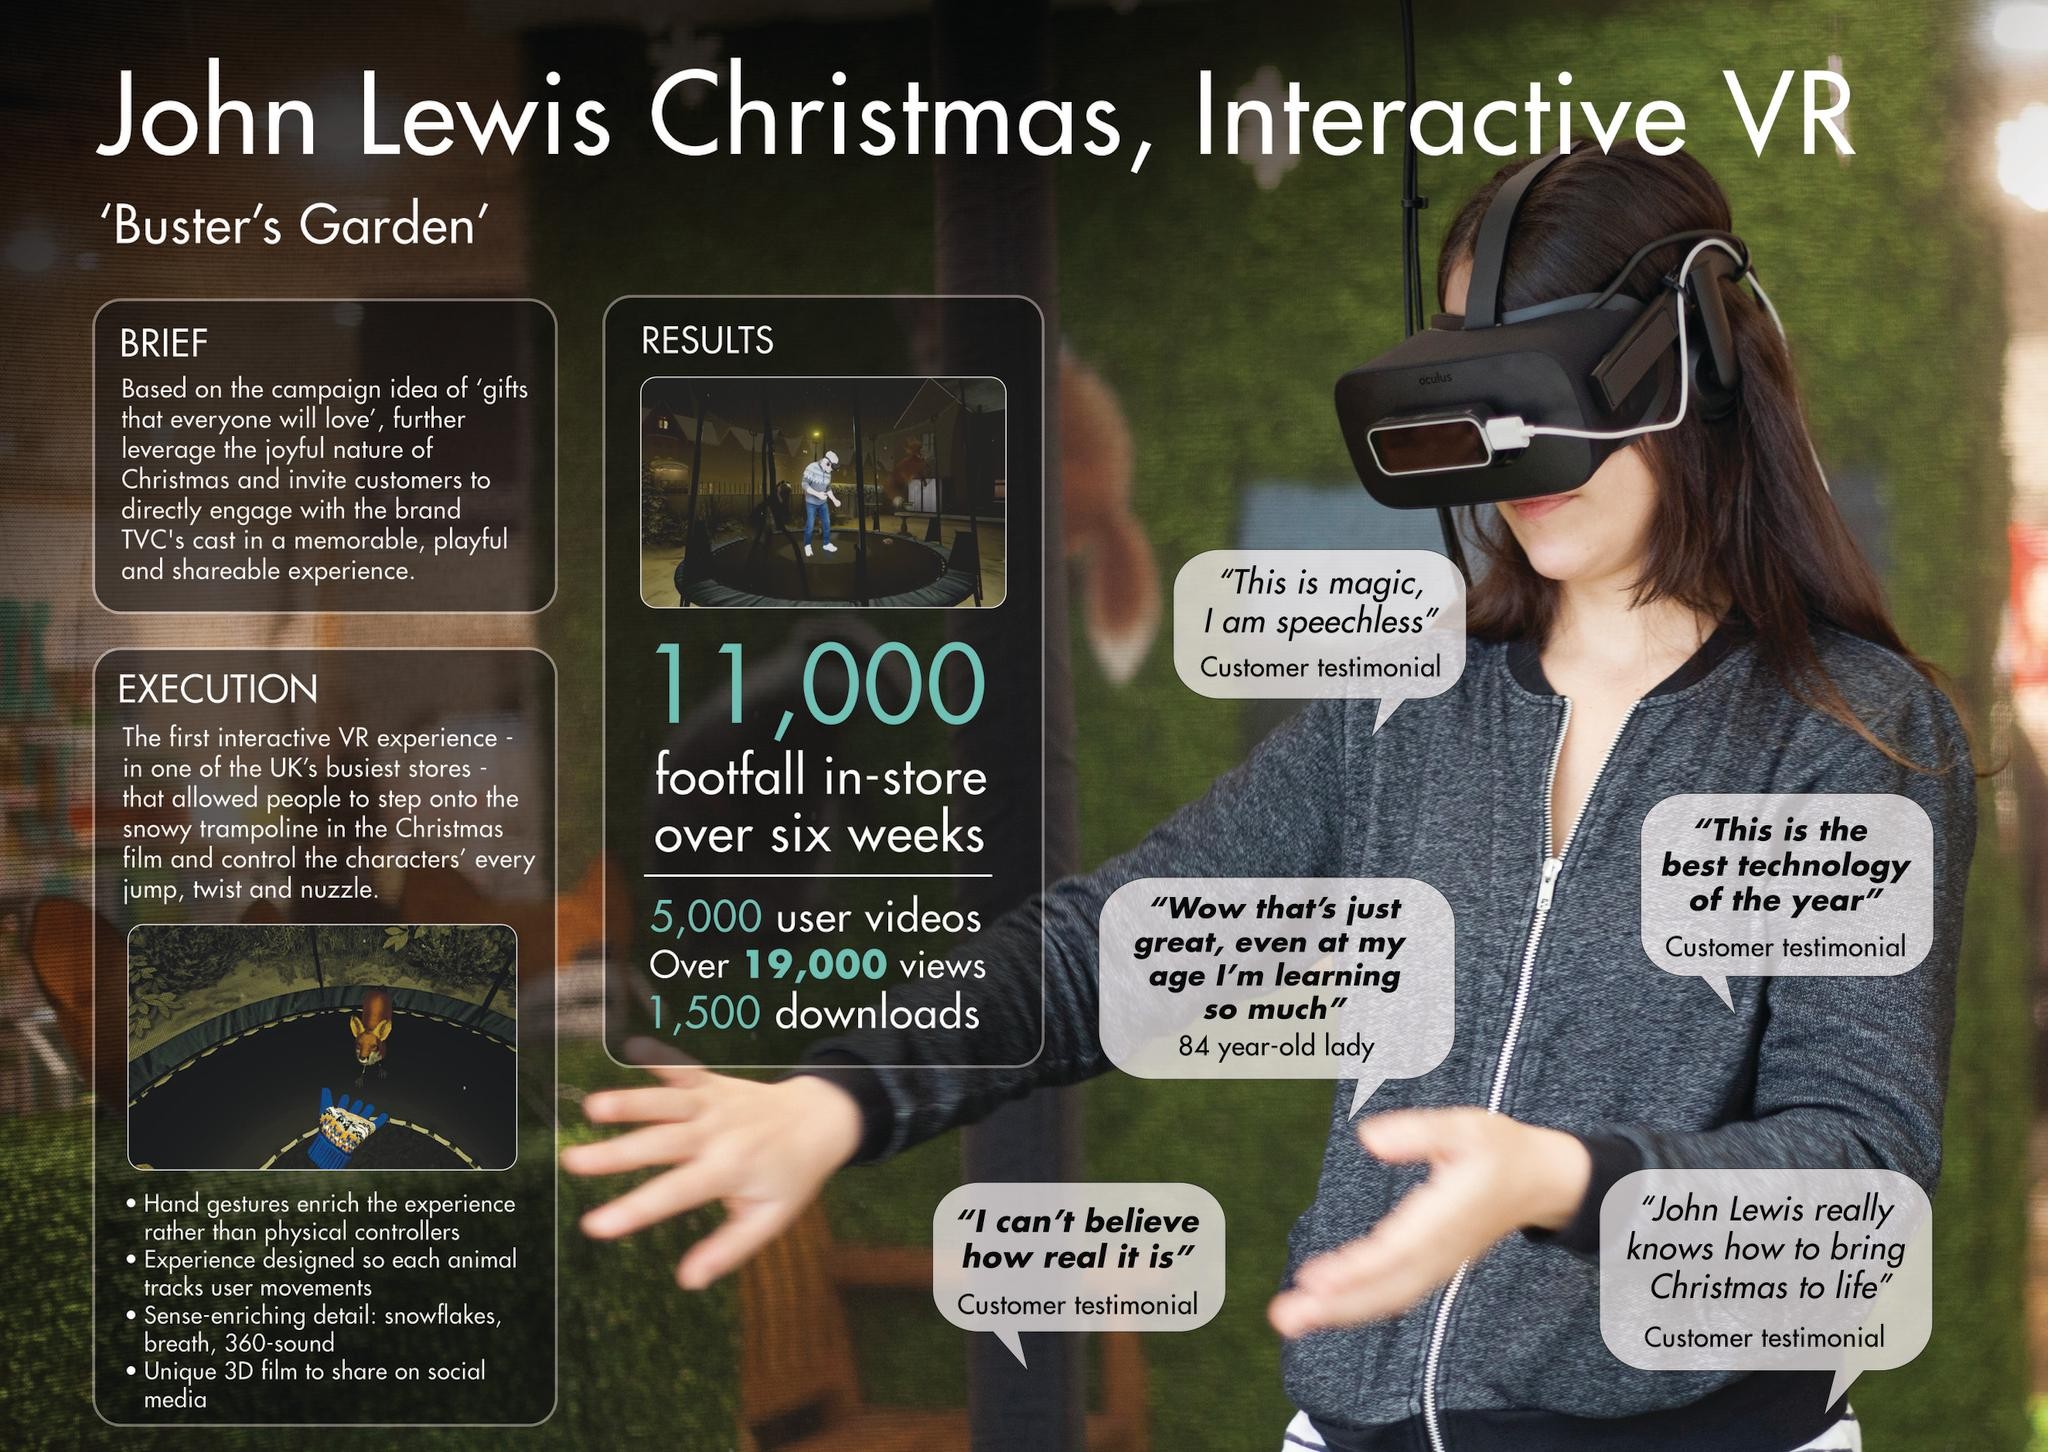 John Lewis Interactive VR Experience Buster's Garden